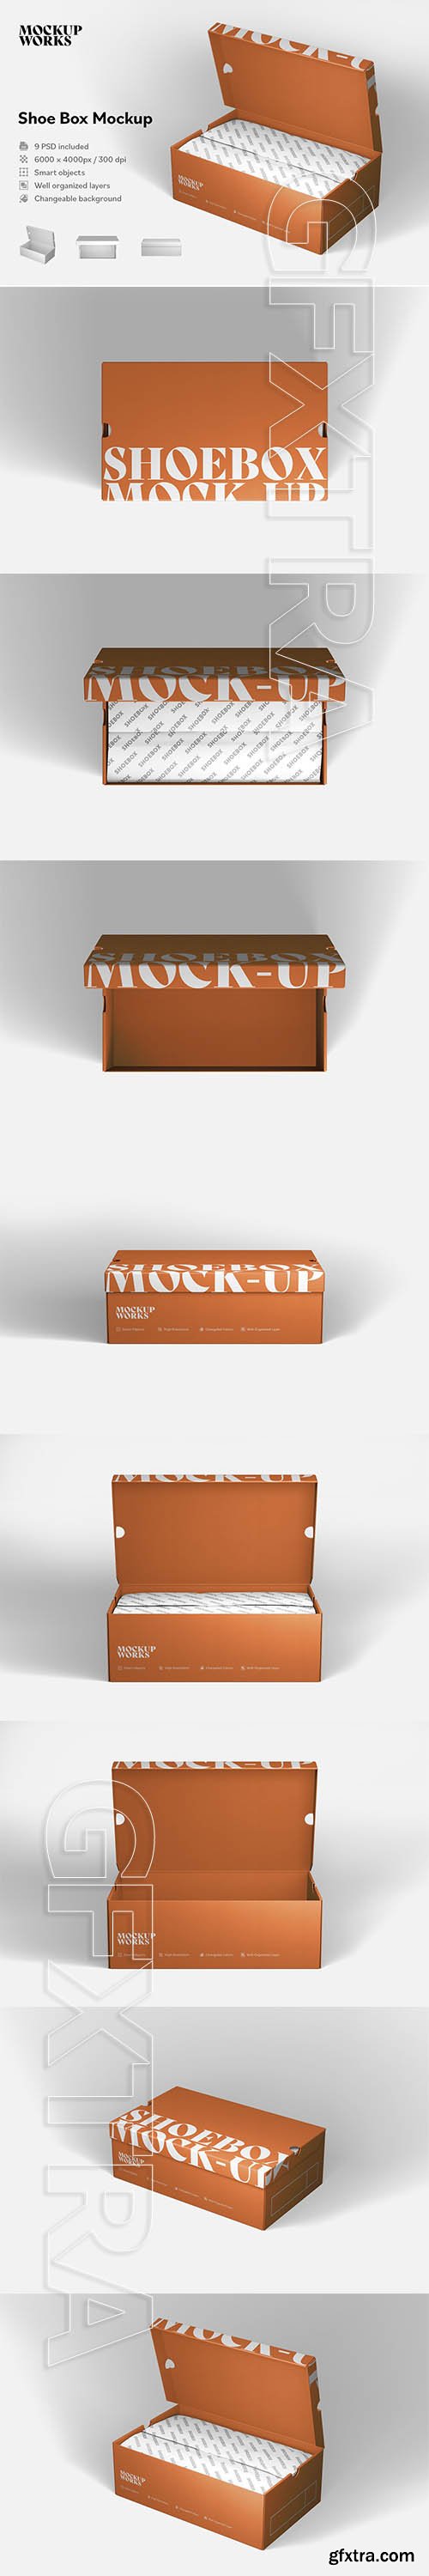 CreativeMarket - Shoe Box Mockup 5838007